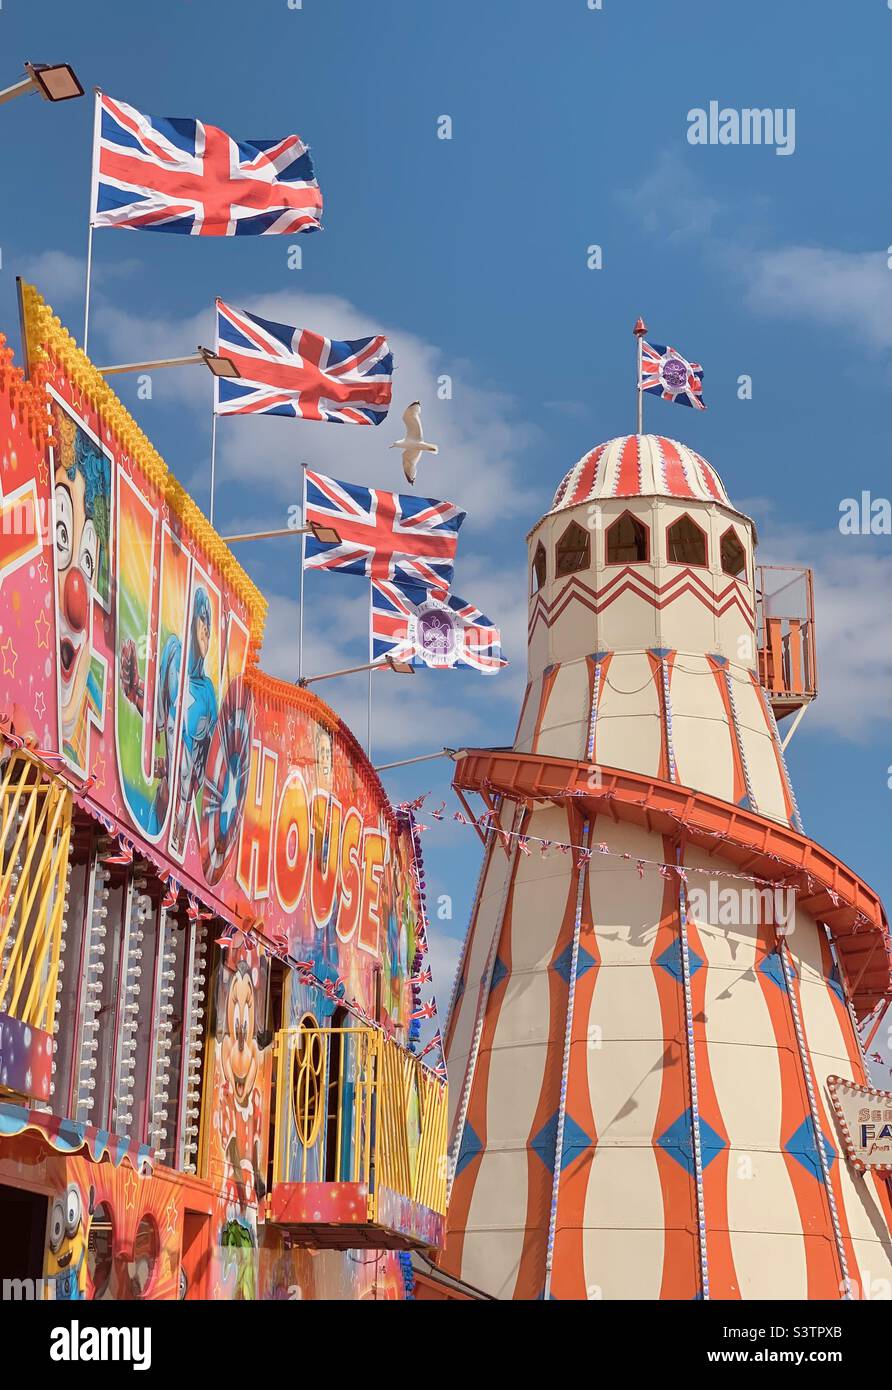 British Seaside funfair- UK Union Flags flying at a seaside fun ride amusement park in Hunstanton Norfolk coast - summer Britain jubilee flags summertime seagull Stock Photo